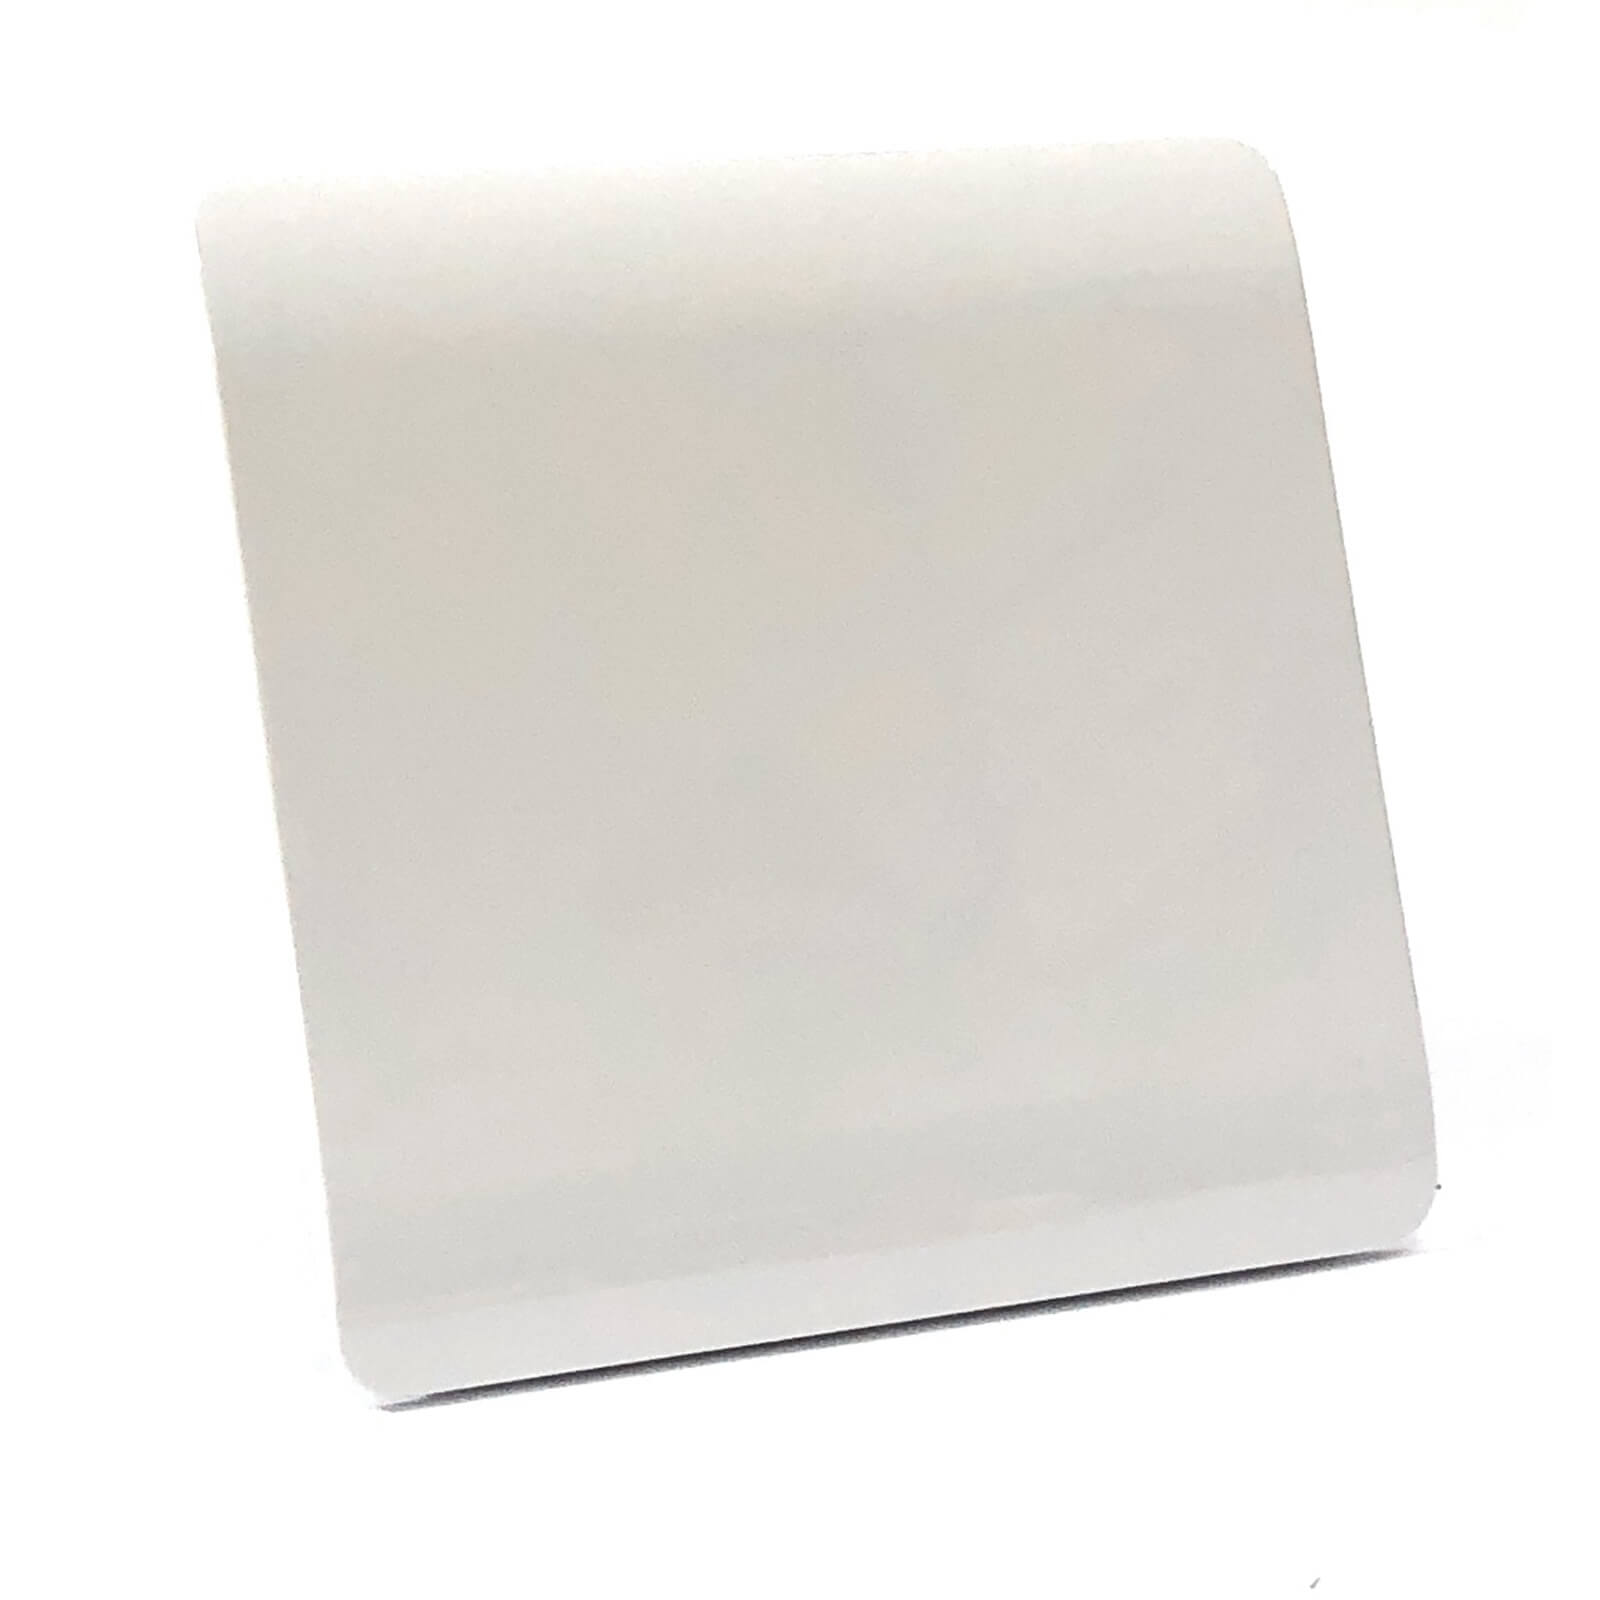 Trendi Switch Single Blanking Plate in White